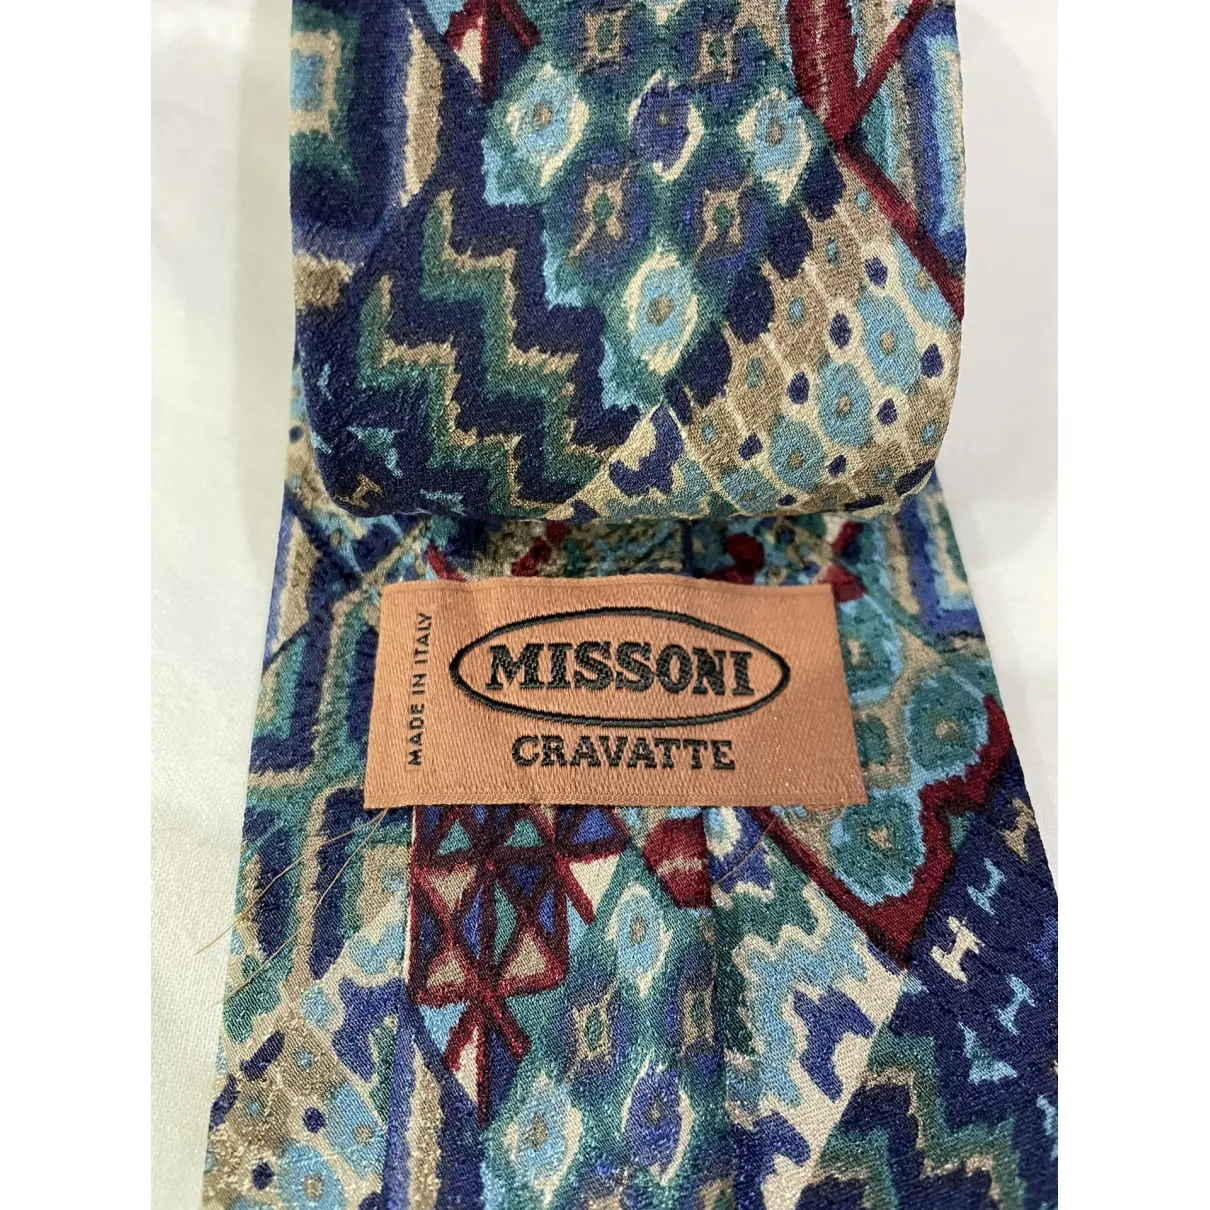 Buy Missoni Silk tie online